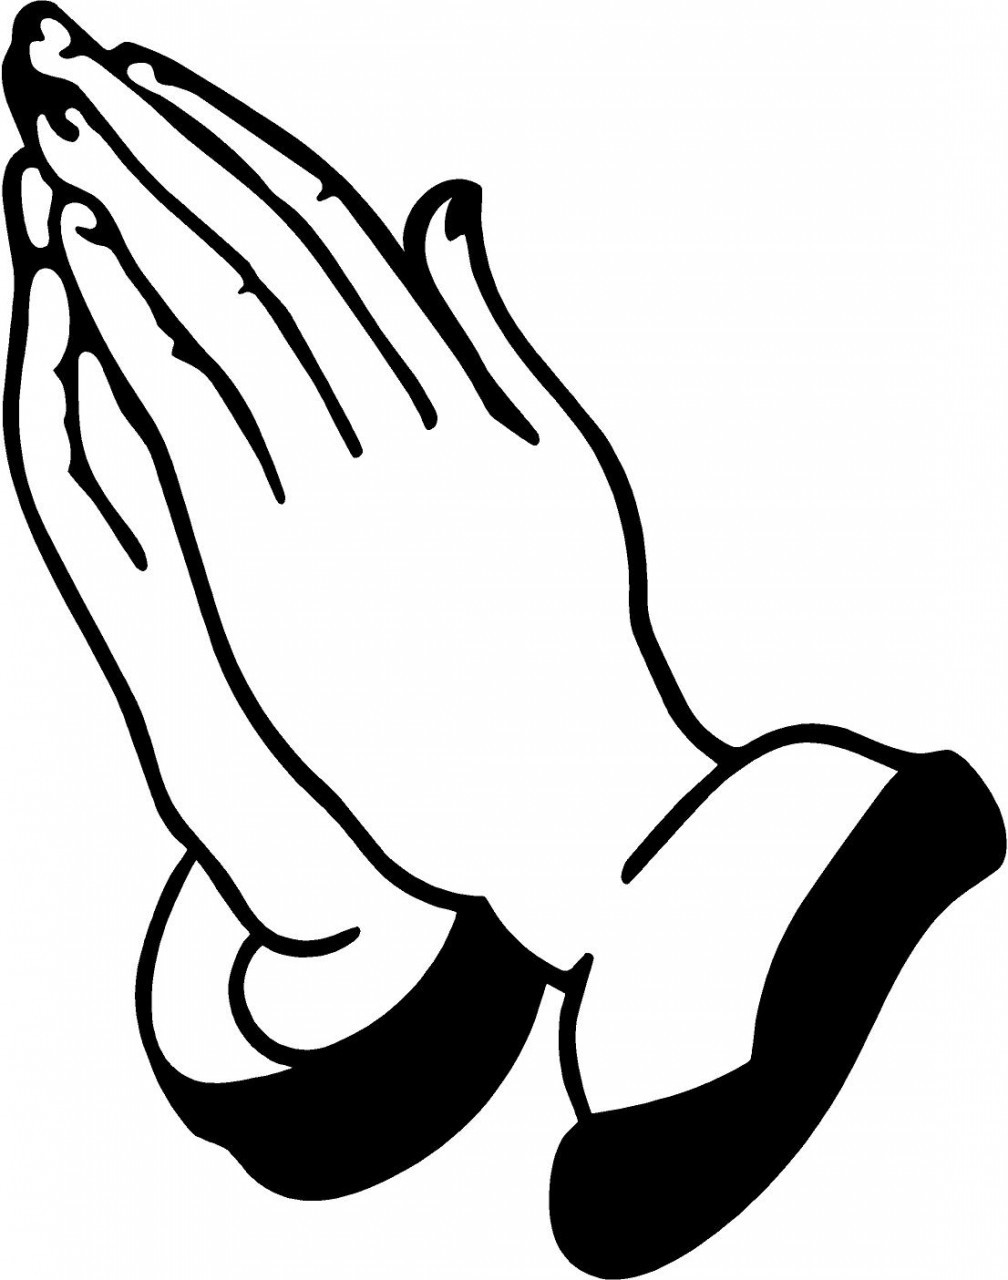 Praying Hands Clipart u0026amp; Praying Hands Clip Art Images - ClipartALL clipartall.com